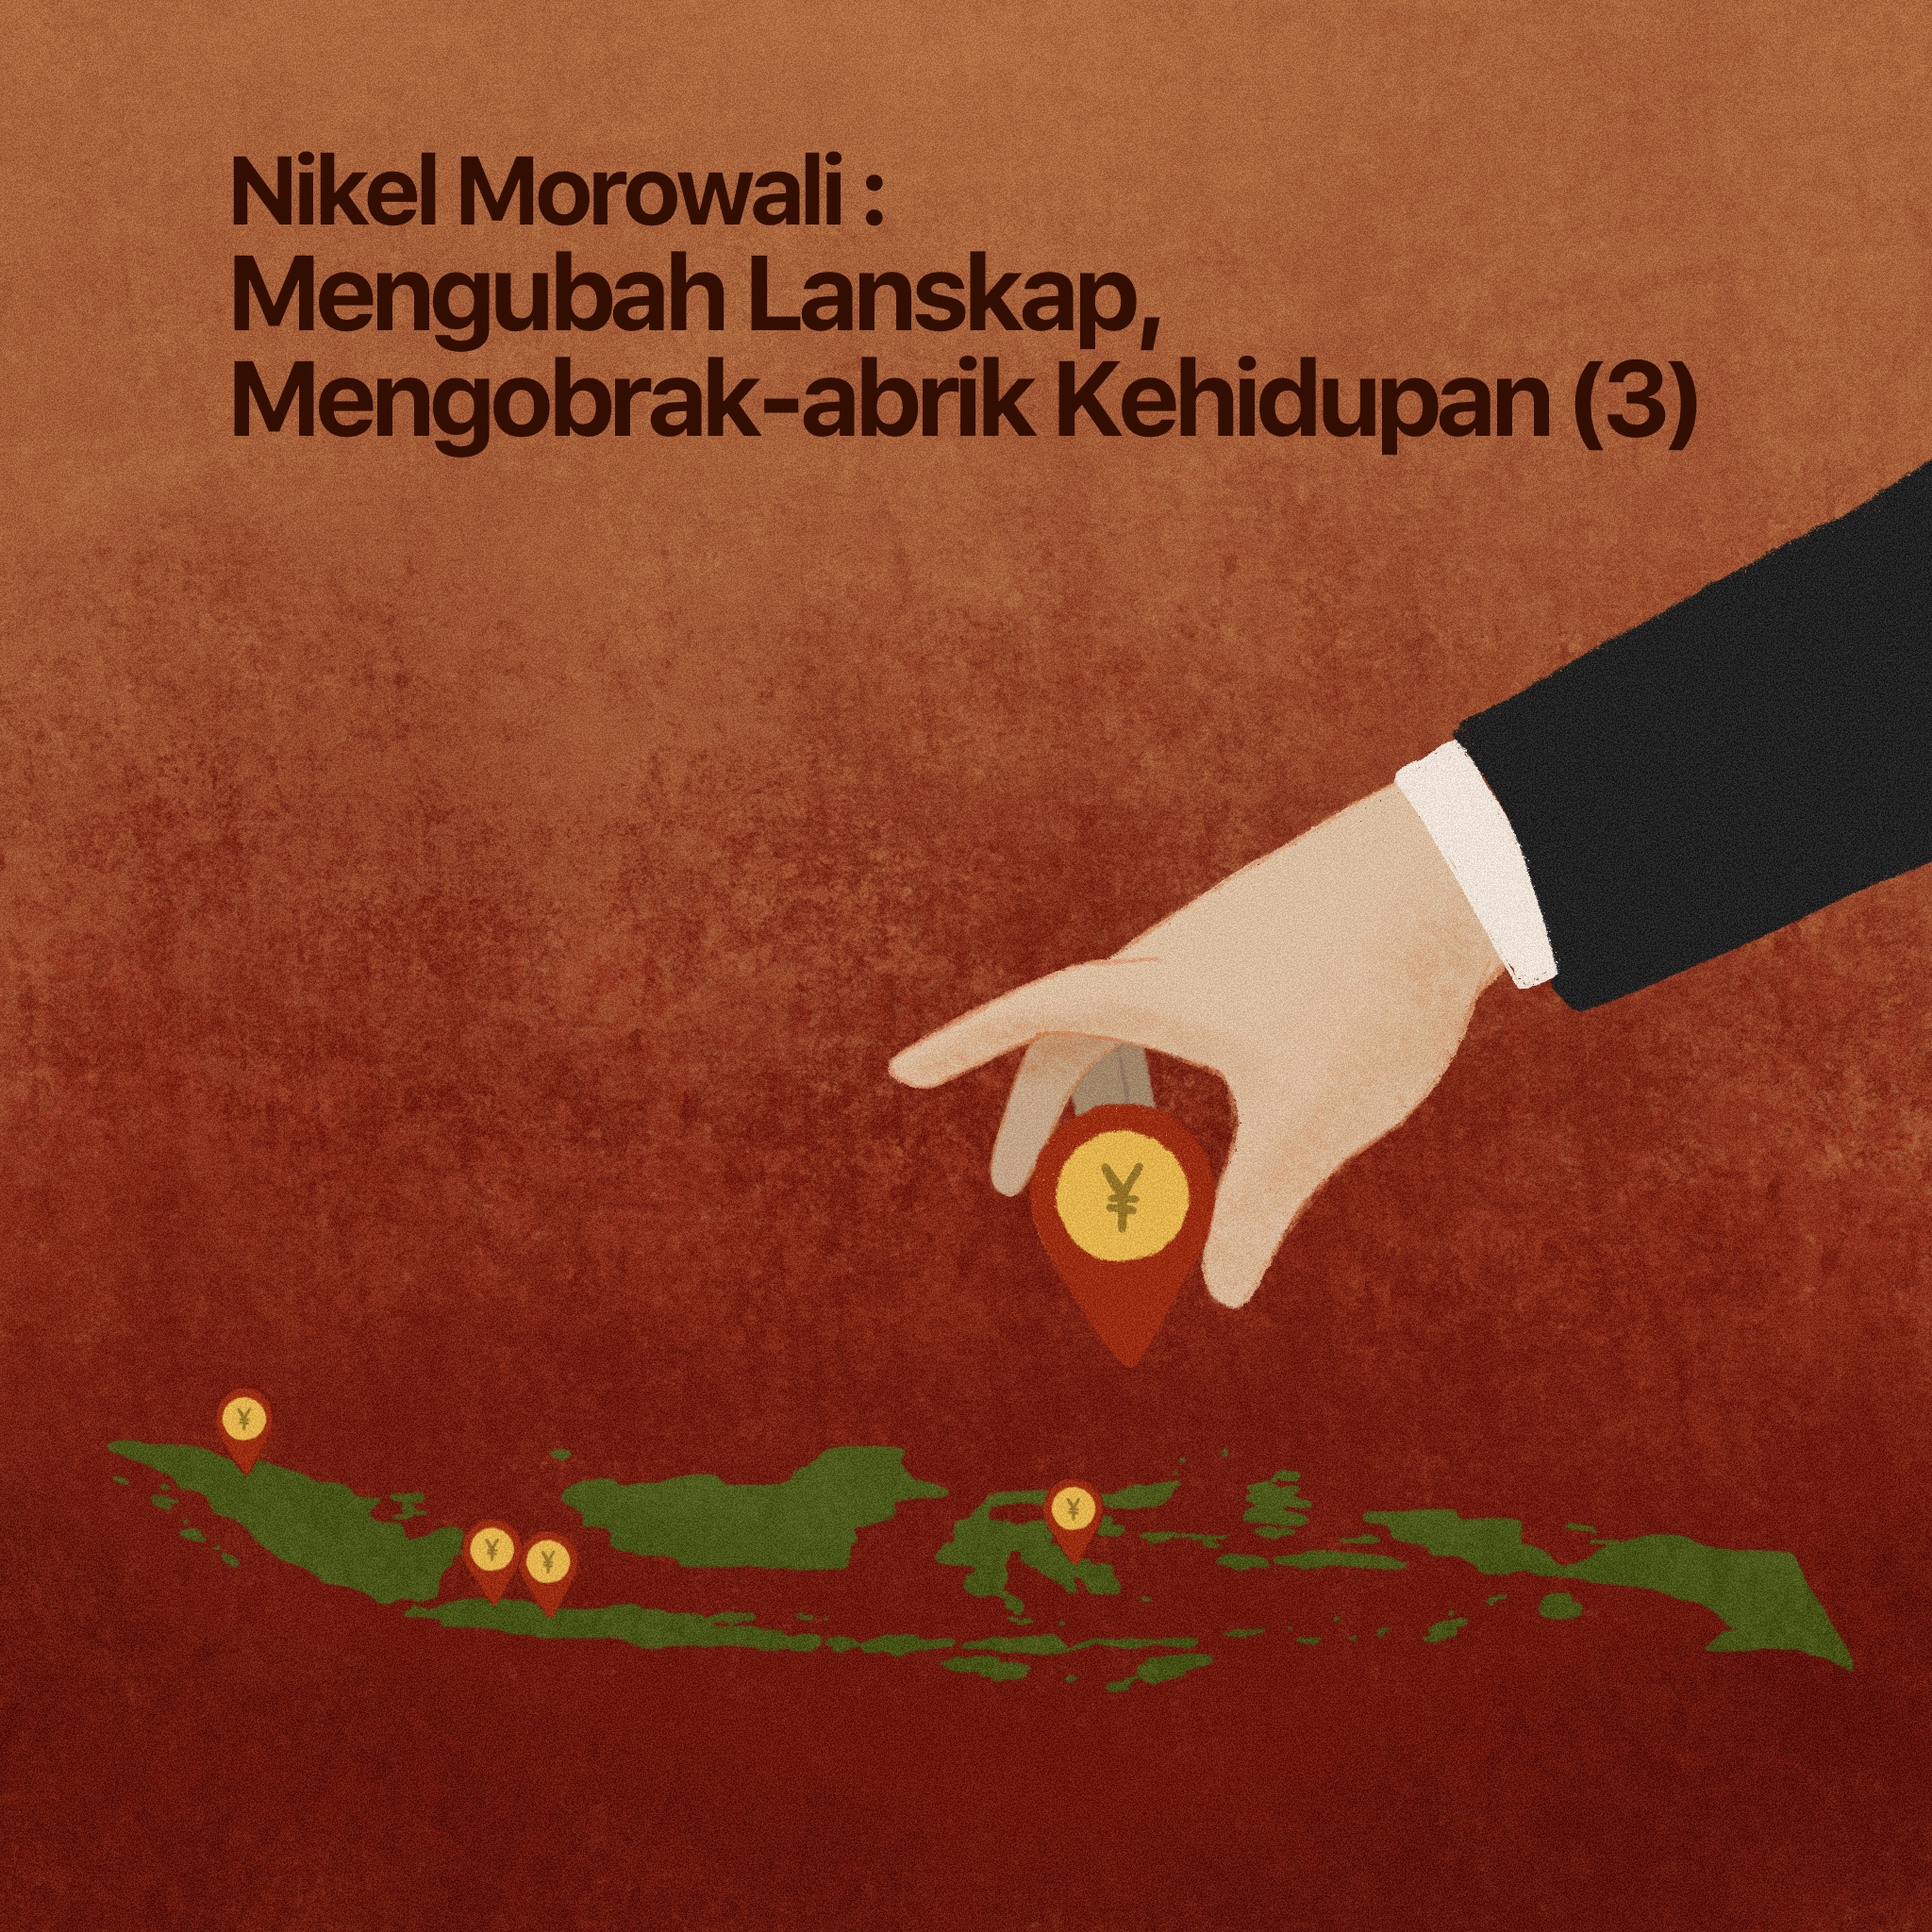 Nikel Morowali: Mengubah Lanskap, Mengobrak-abrik Kehidupan (3)